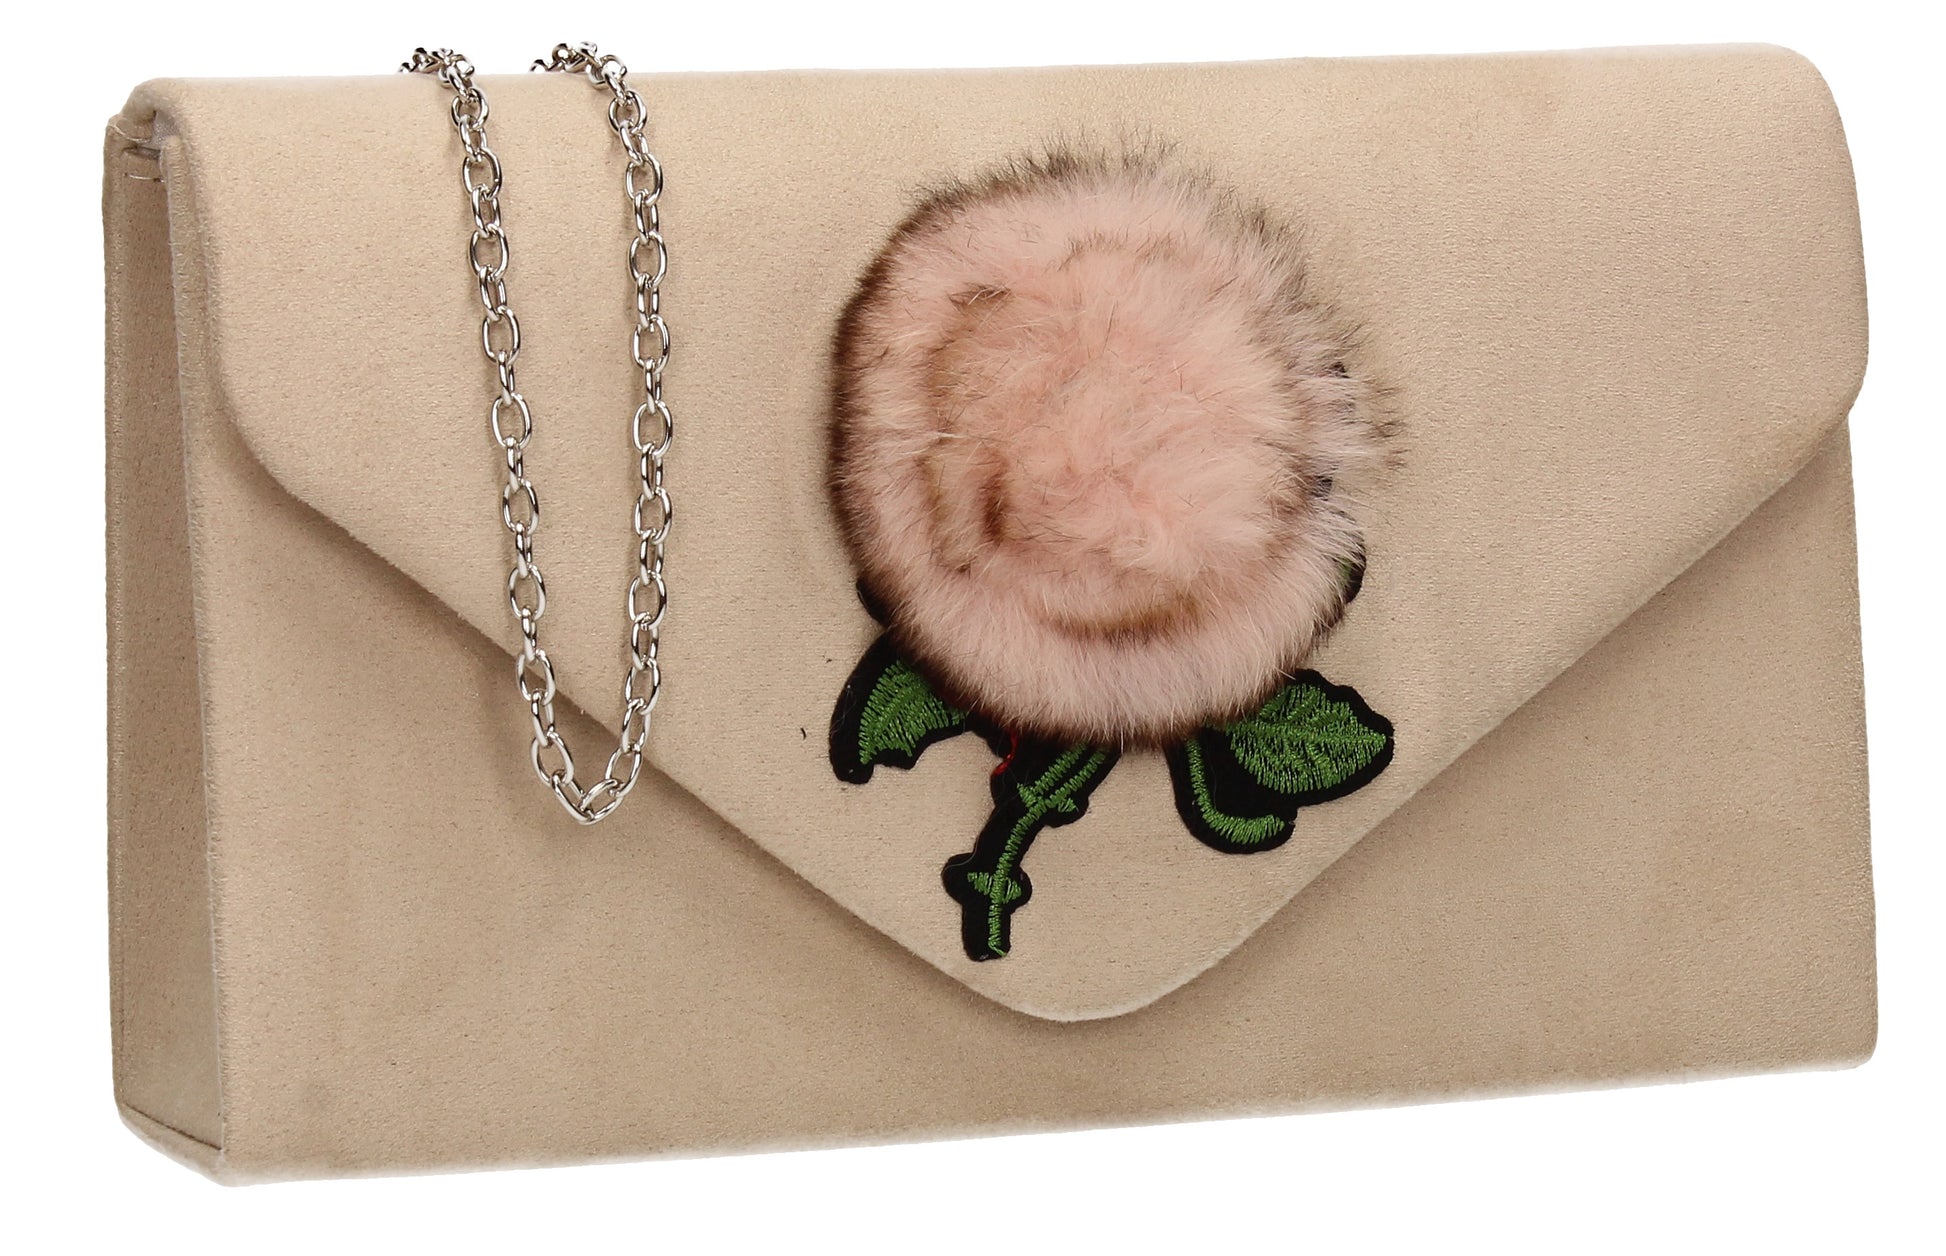 SWANKYSWANS Roxanne Fur Rose Clutch Bag Beige Cute Cheap Clutch Bag For Weddings School and Work